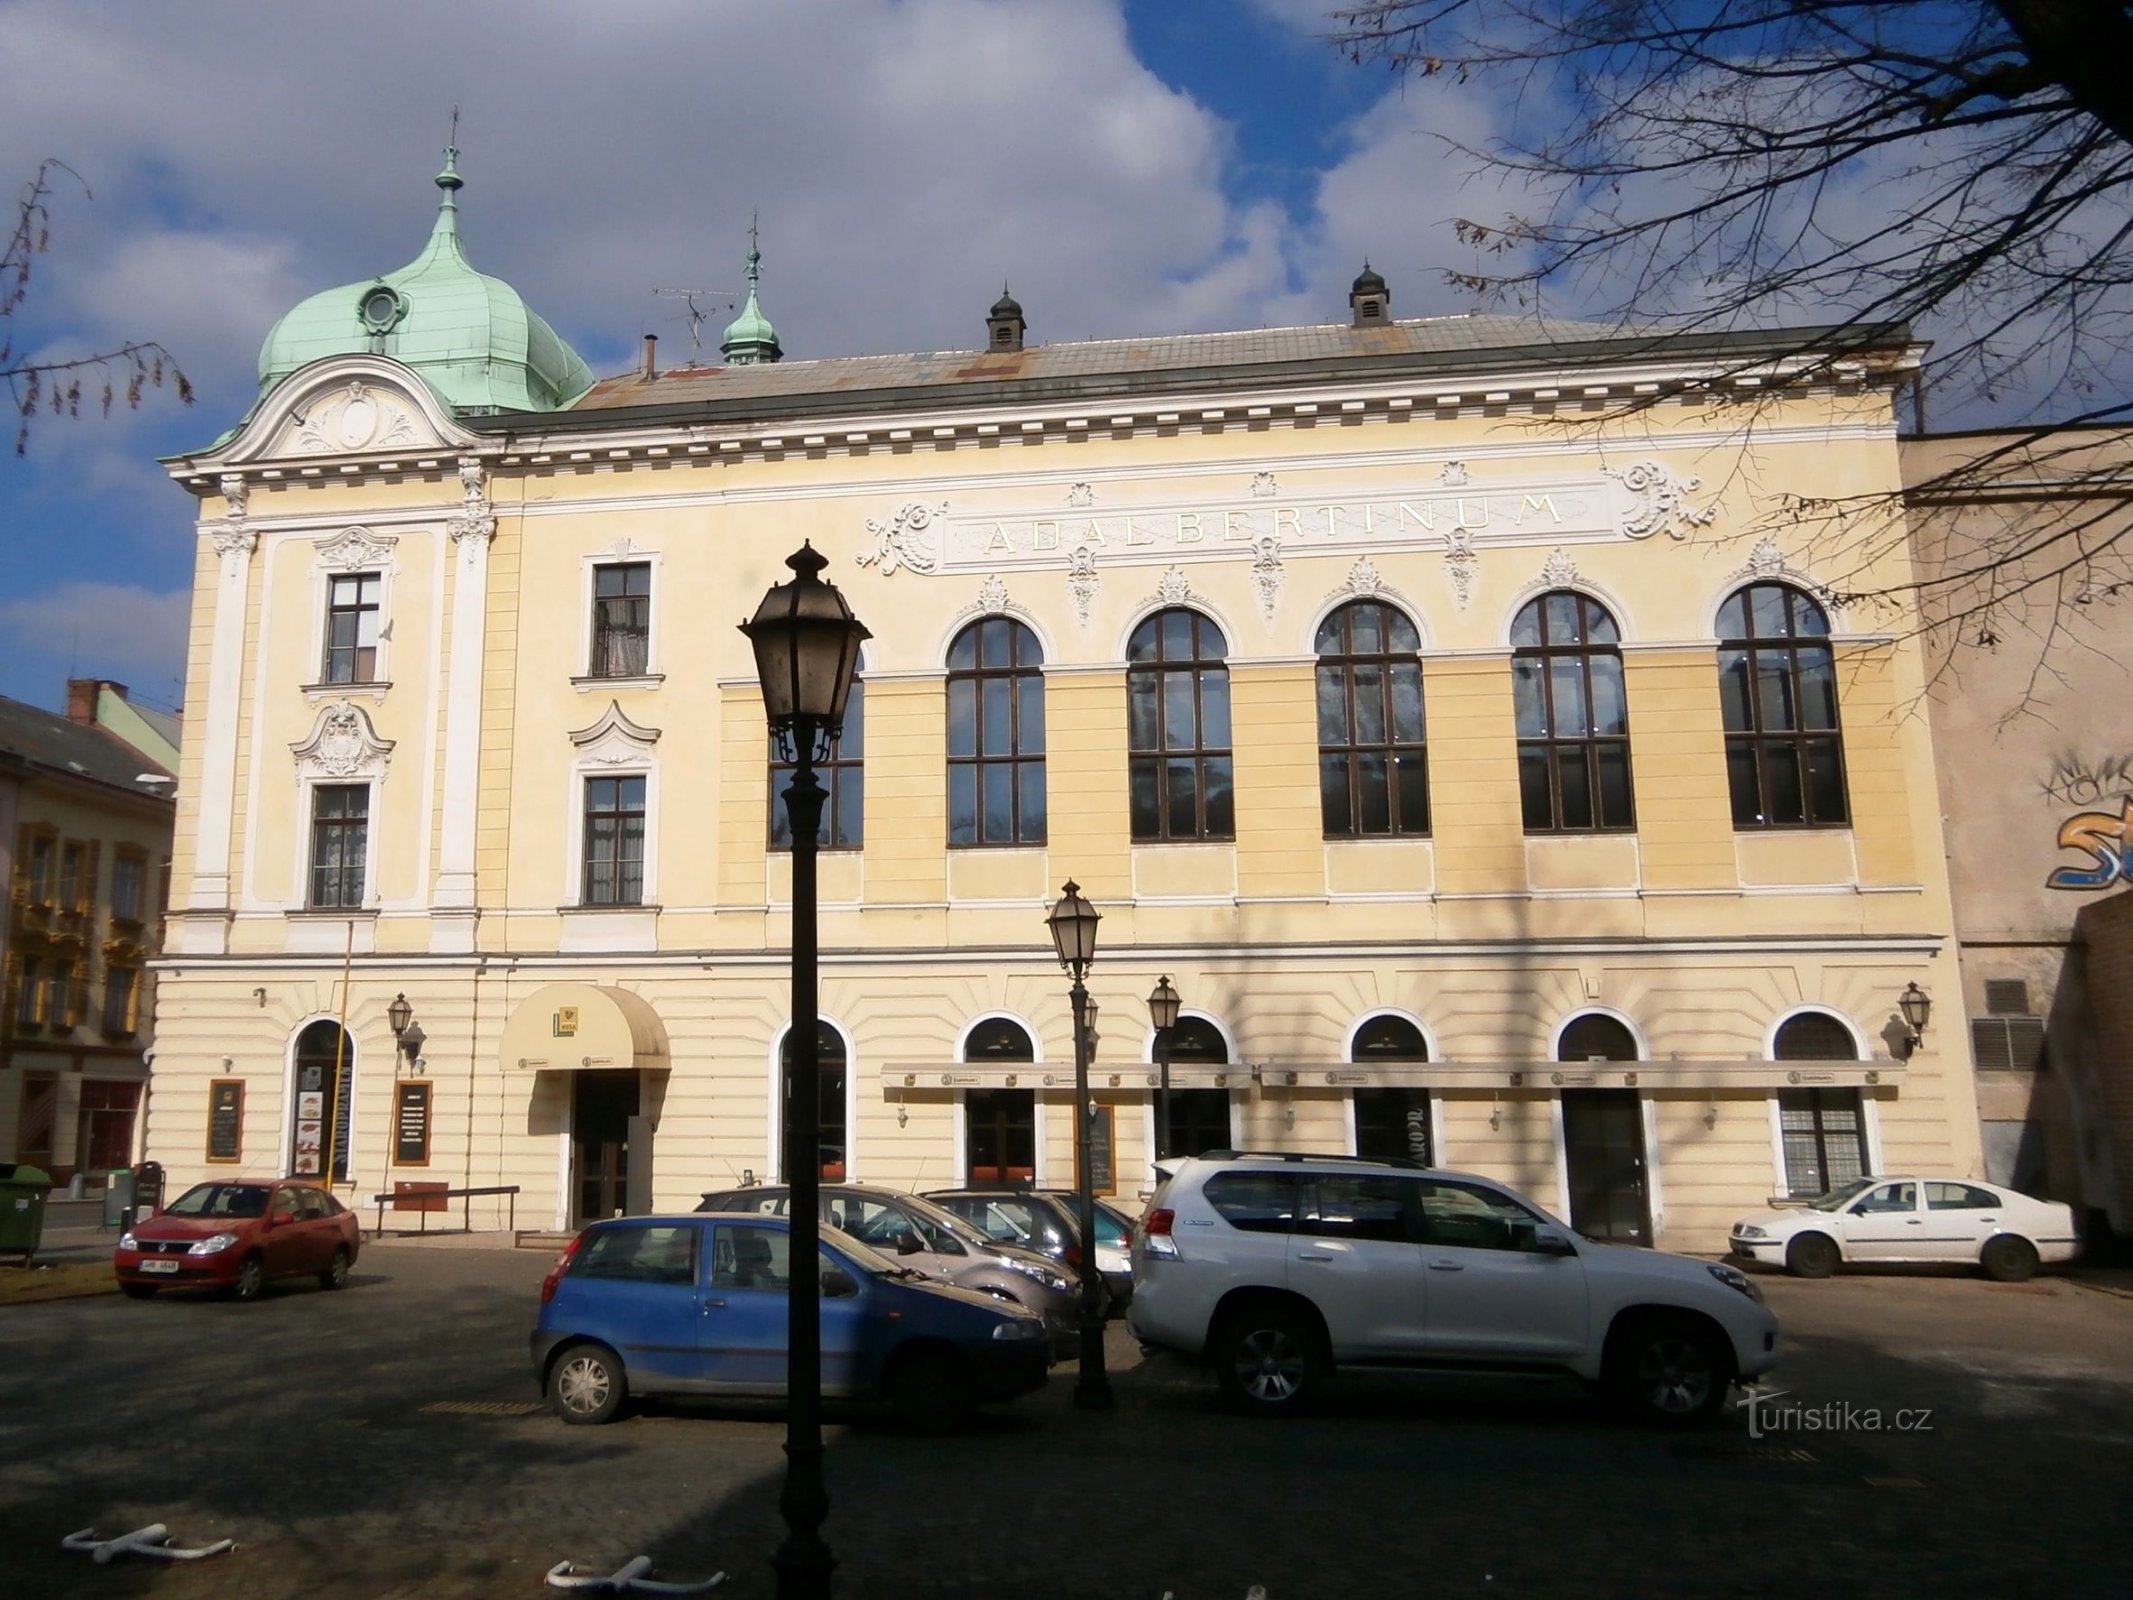 Adalbertinum (Hradec Králové, 1.3.2014. april XNUMX)